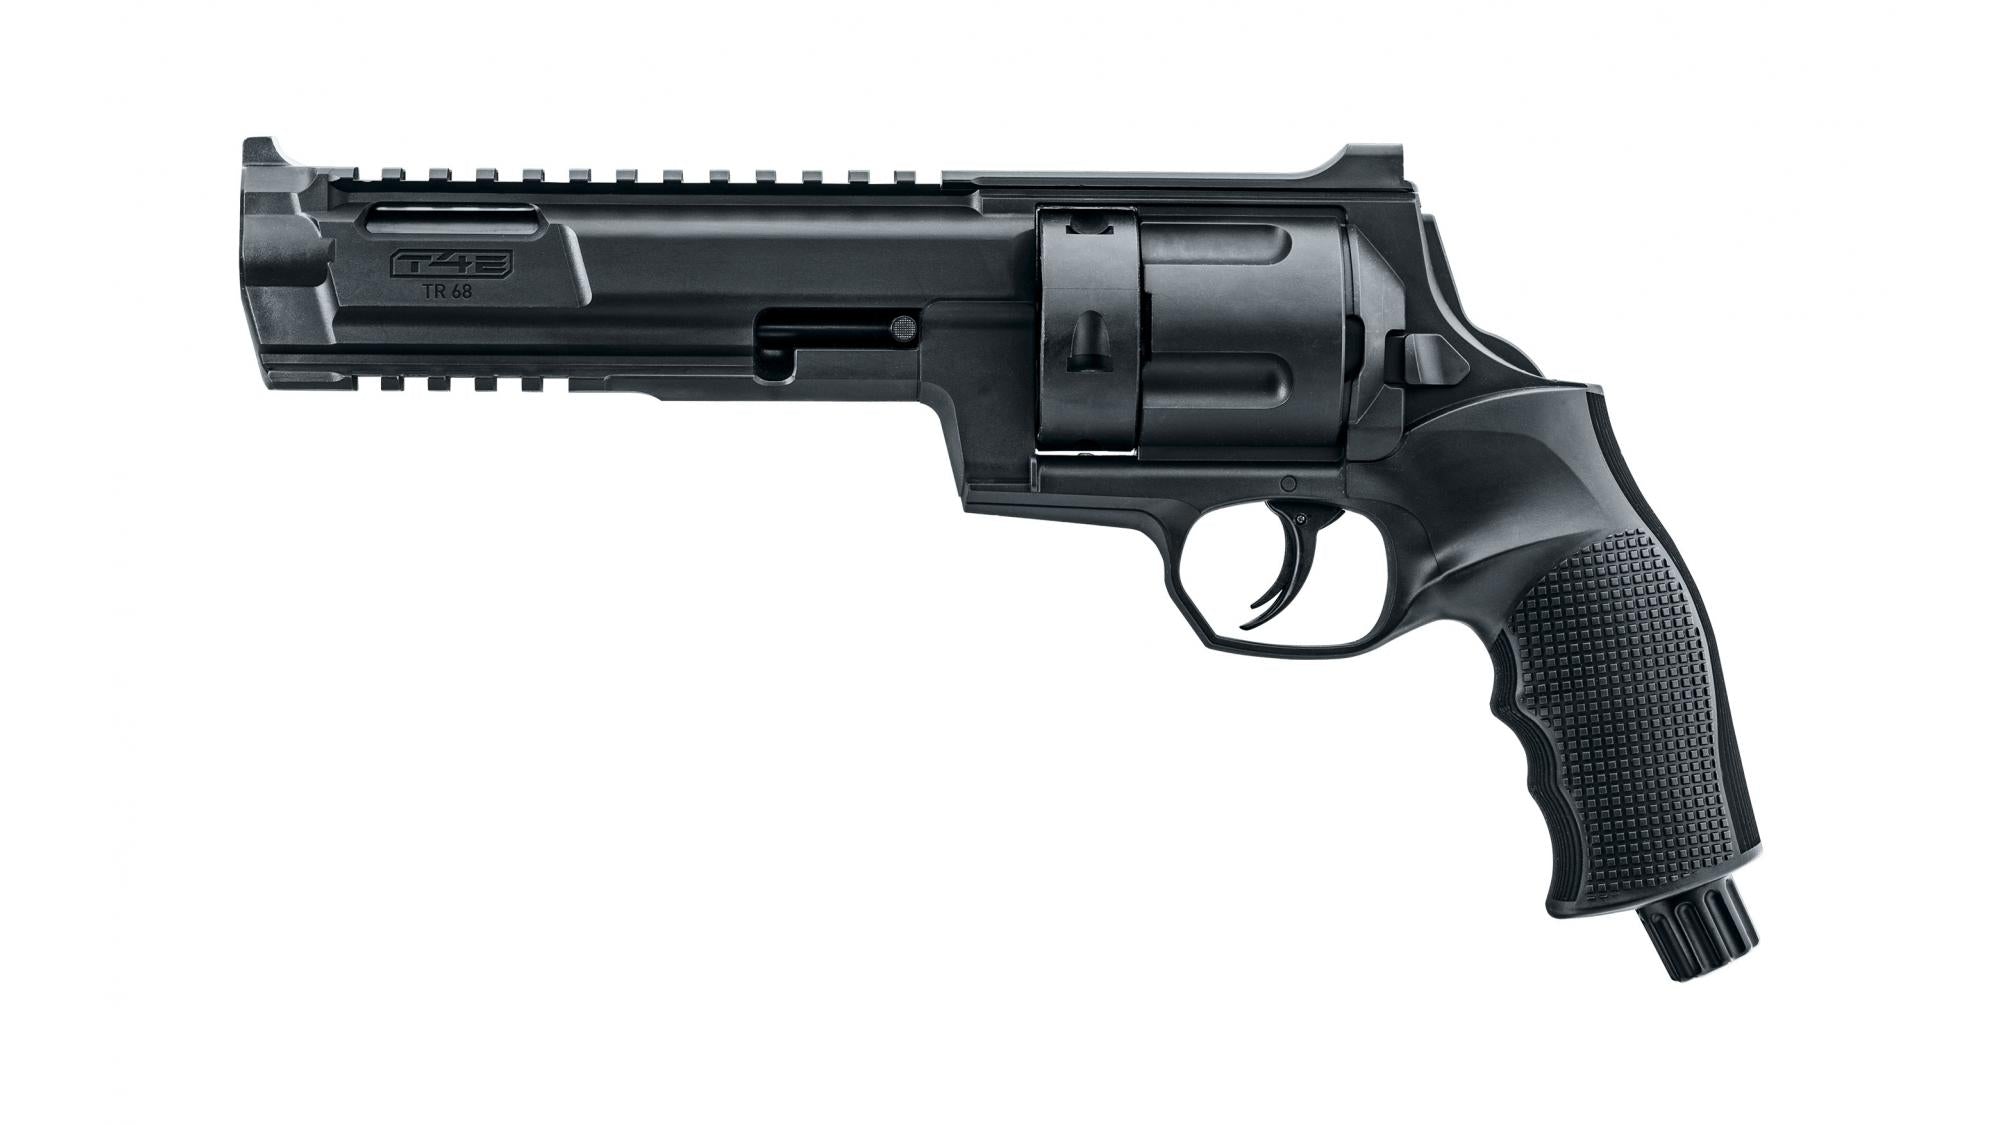 T4E HDR 50 Compressed Air Revolver